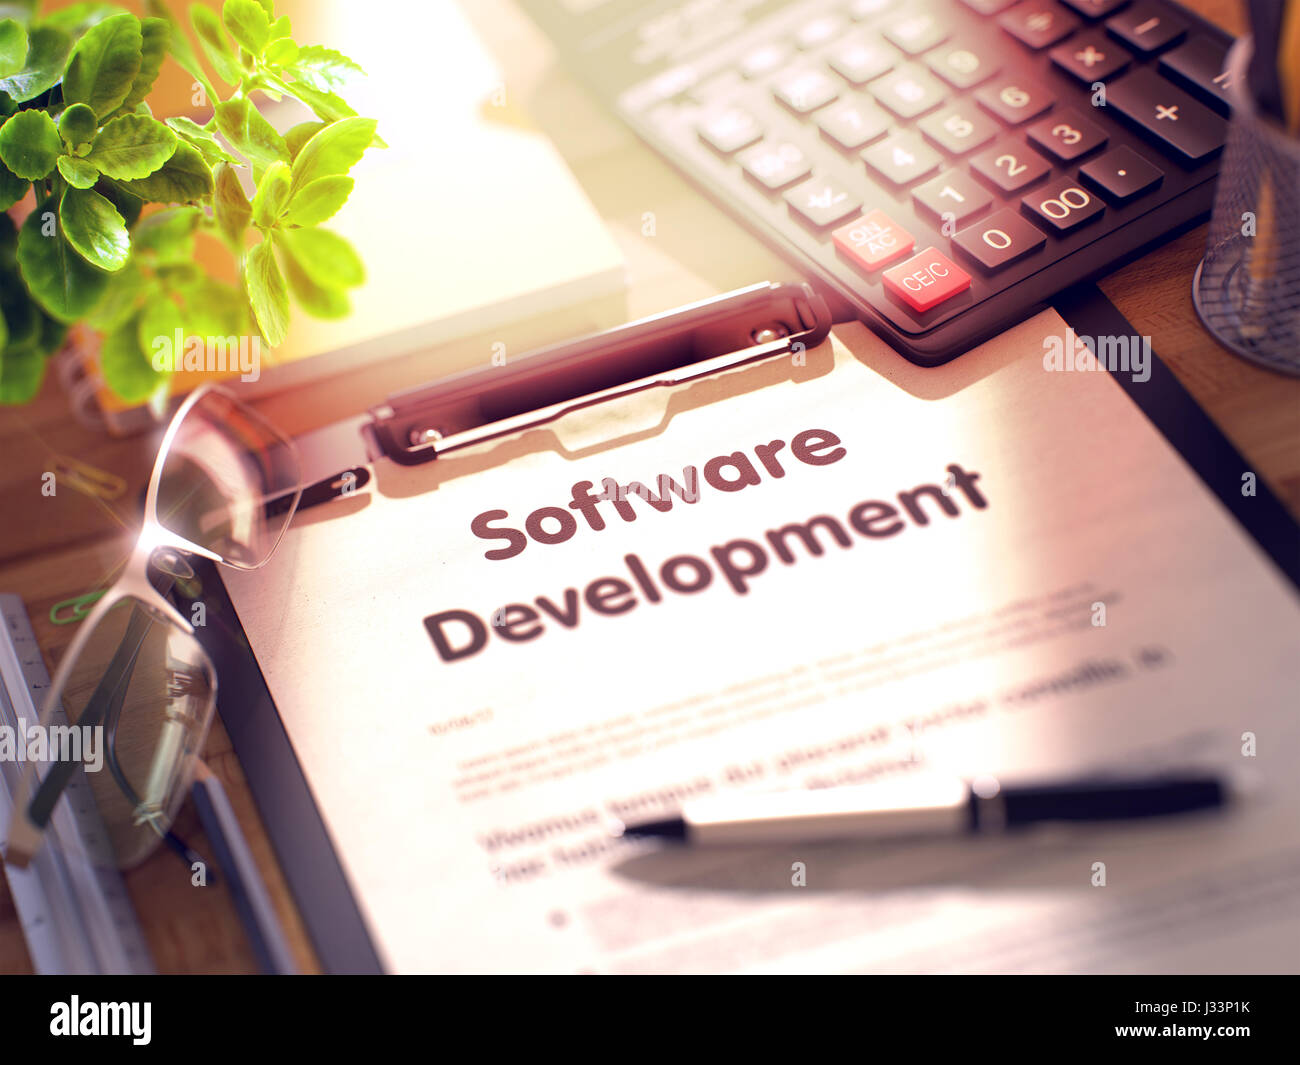 Software Development - Text on Clipboard. 3d. Stock Photo